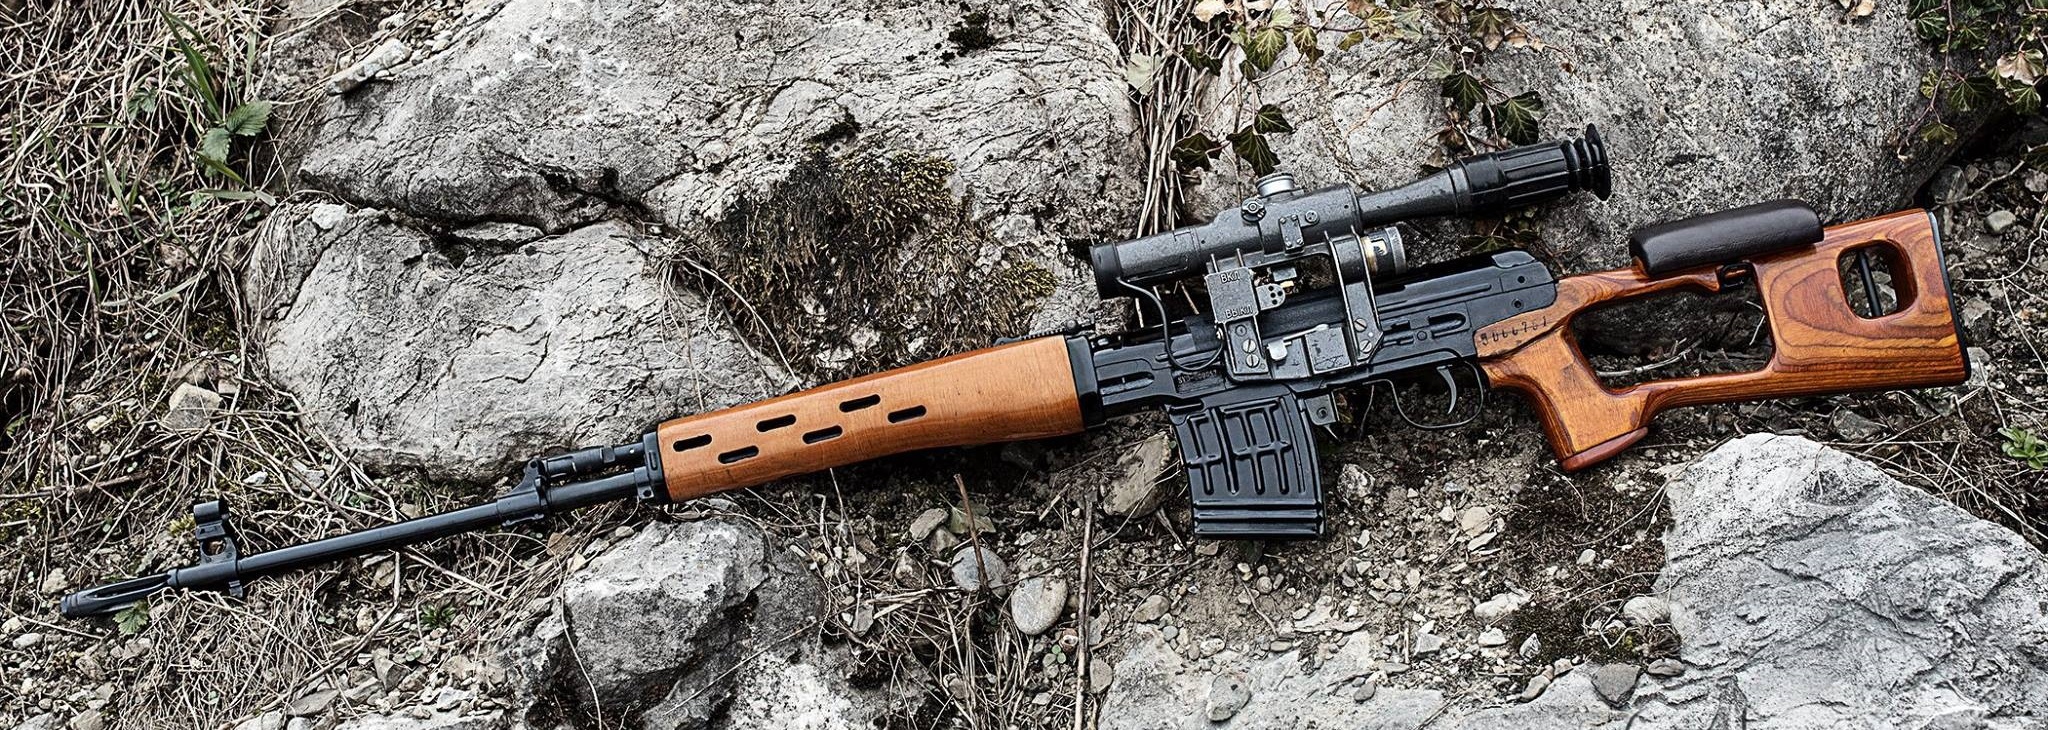 СВД снайперская винтовка Драгунова 7.62 с глушителем